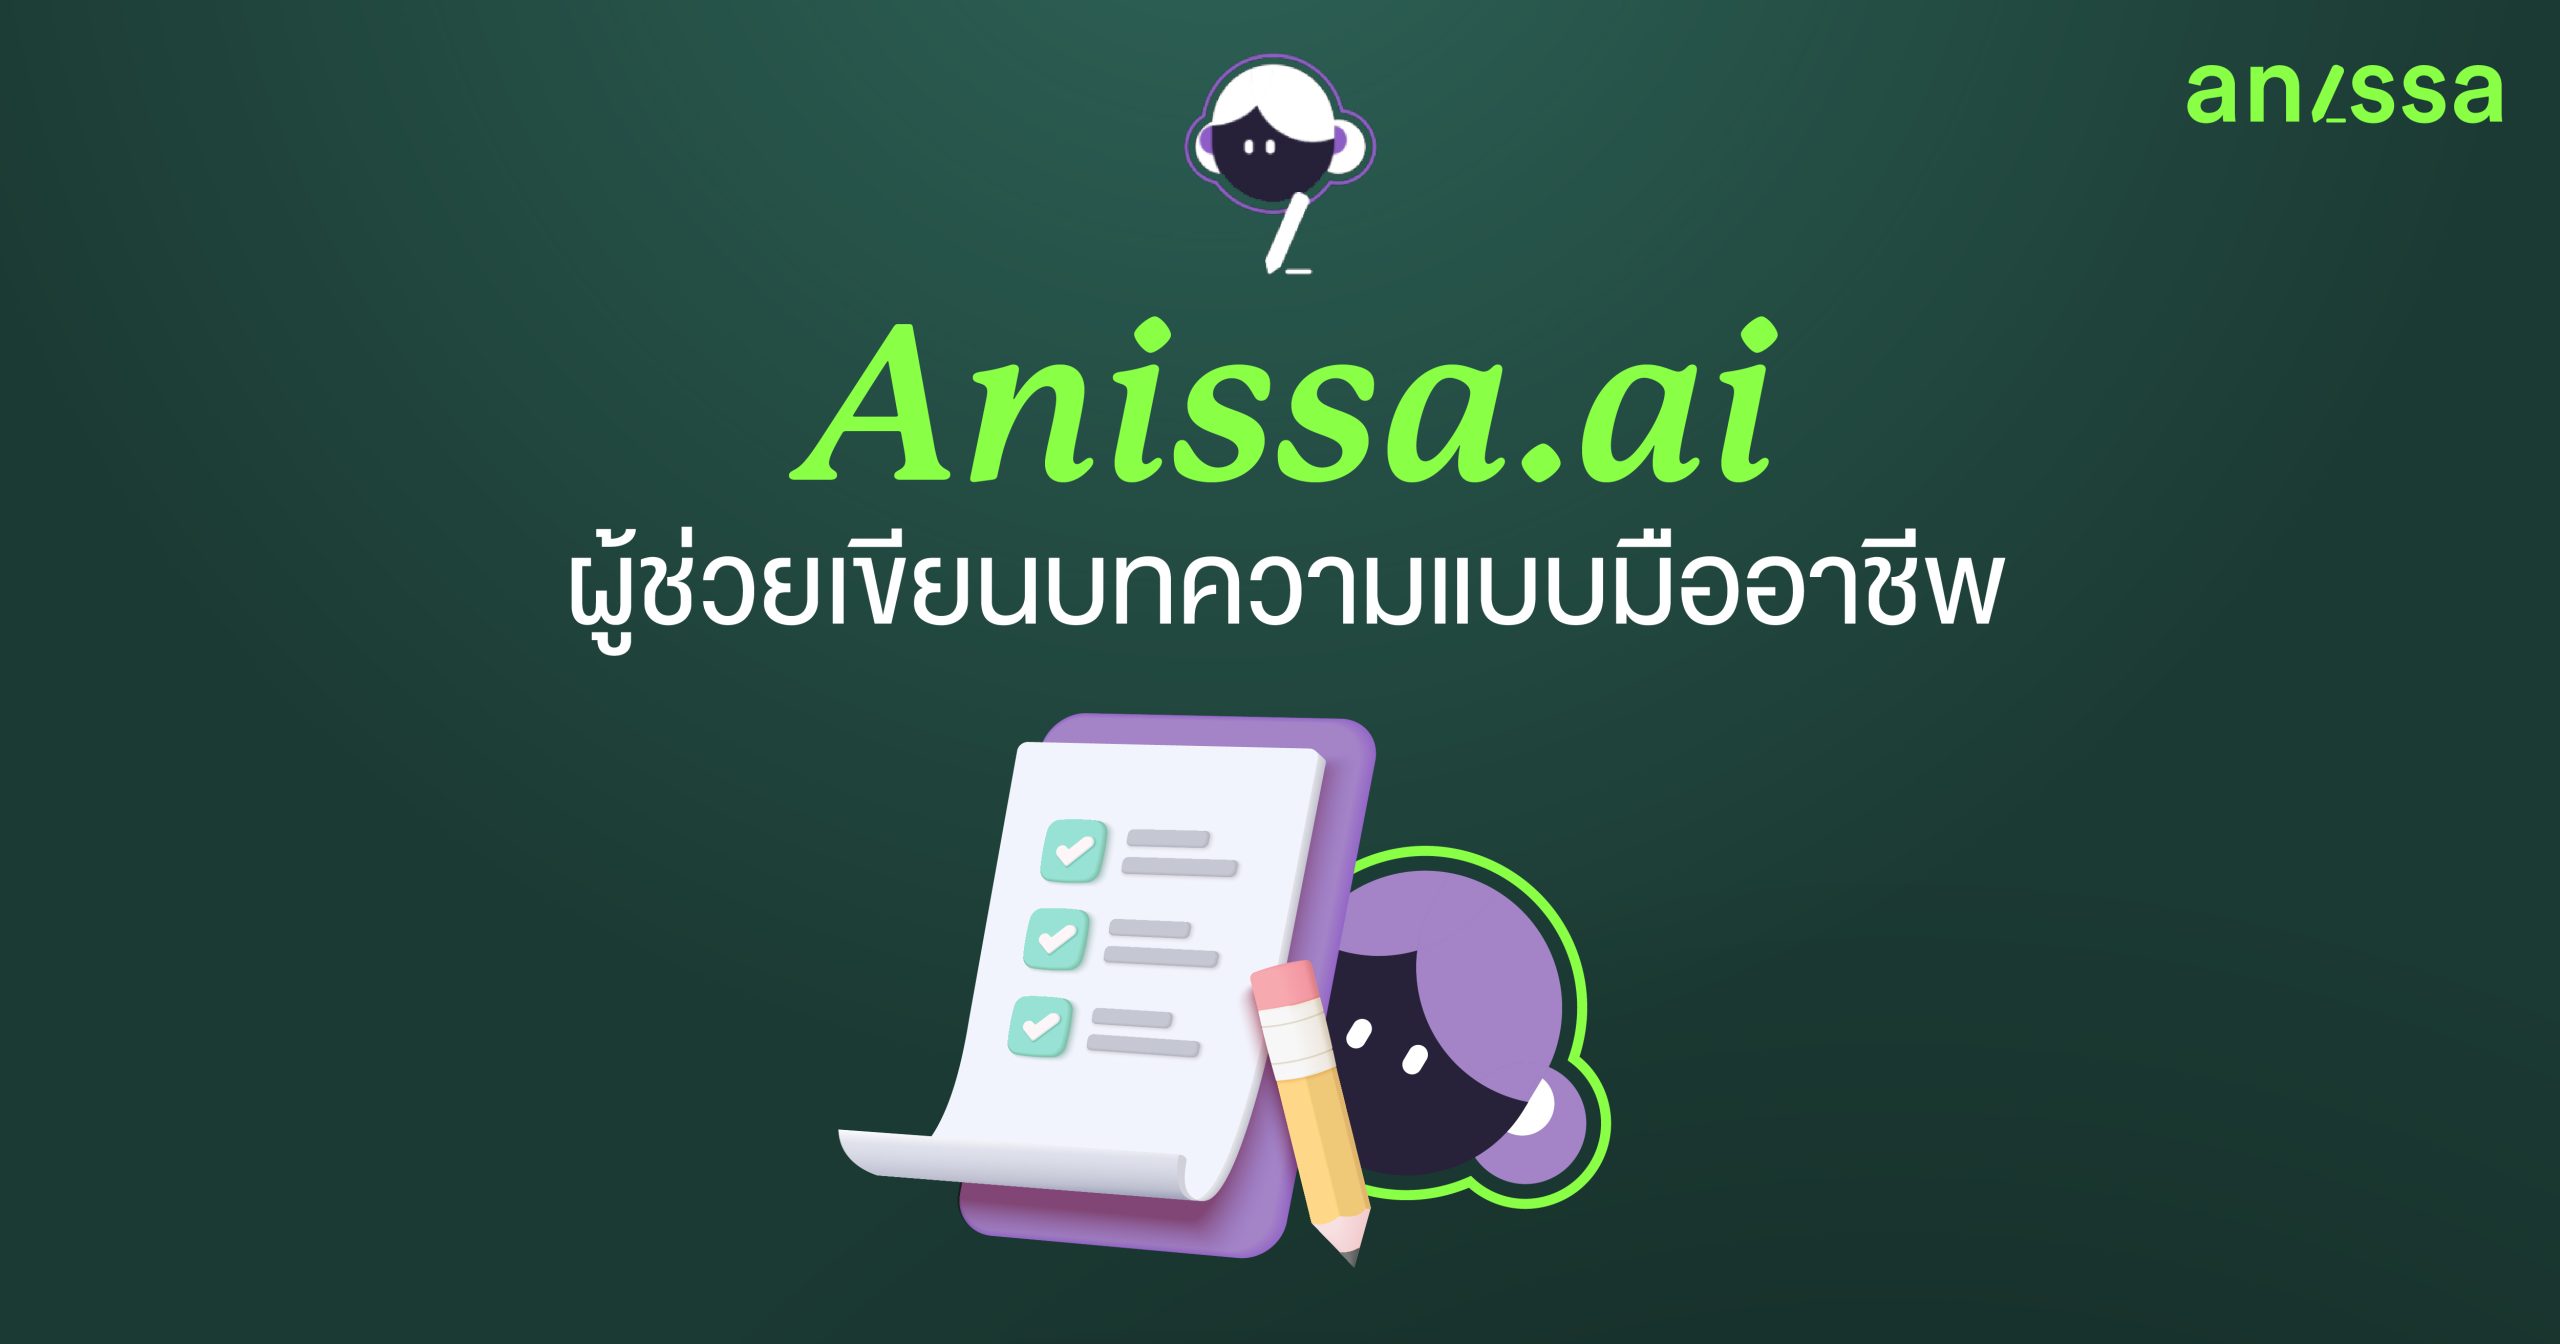 Anissa.ai ผู้ช่วยอัจฉริยะใช้ AI เขียนบทความแบบมืออาชีพ!